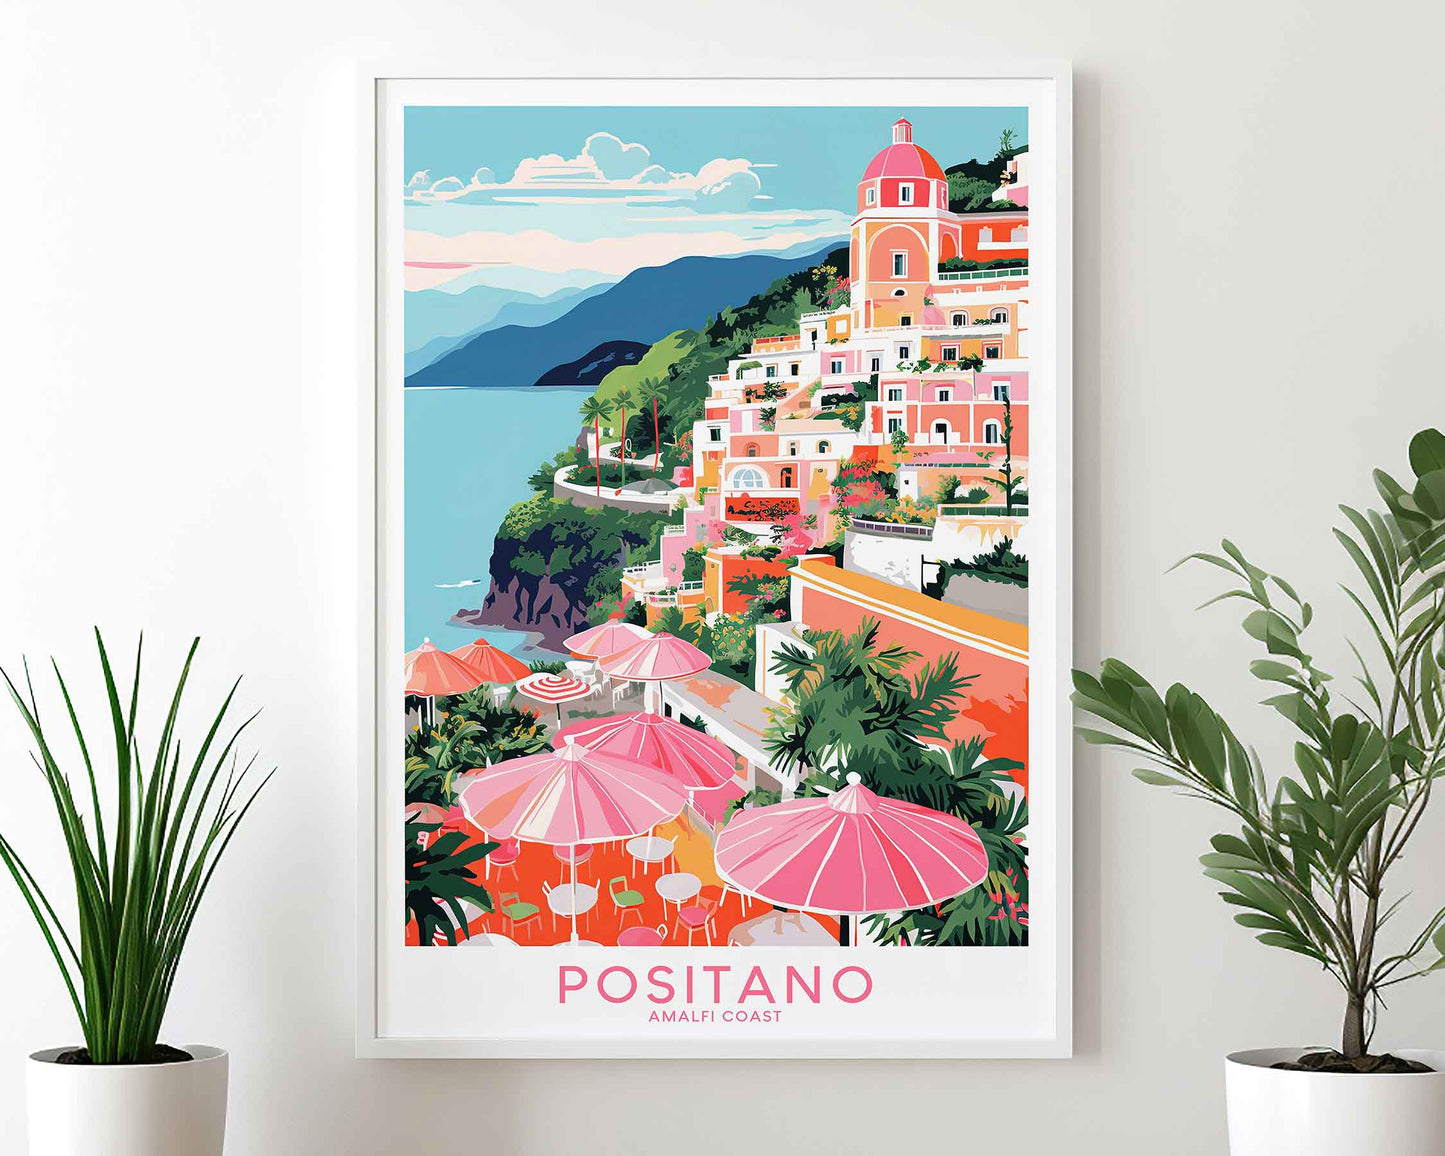 Framed Image of Positano Italy Wall Art Travel Print Posters Illustration